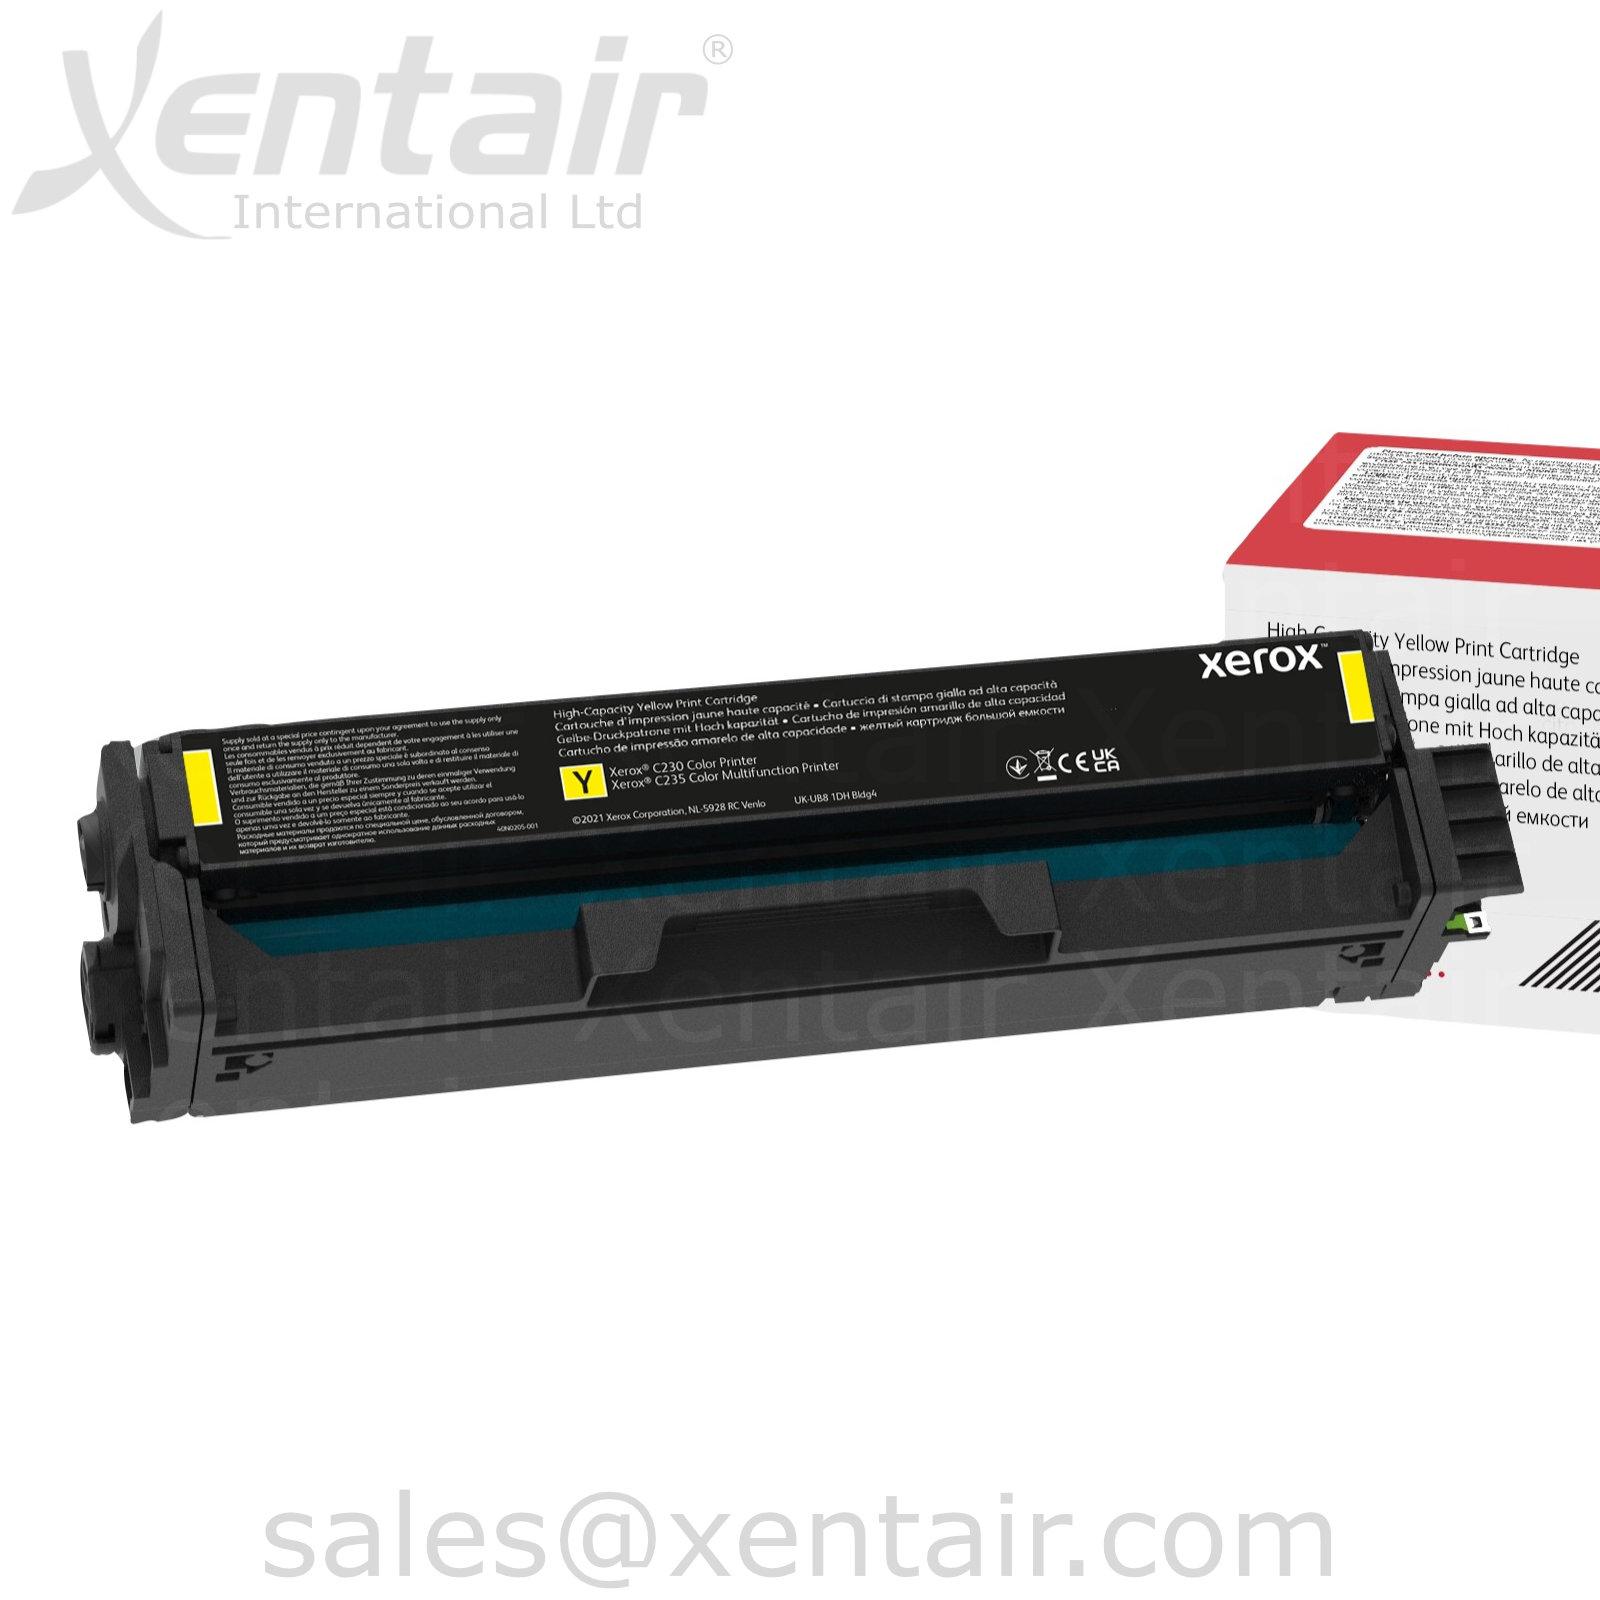 Xerox® C230 C235 High Capacity Yellow Toner Cartridge 006R04394 6R04394